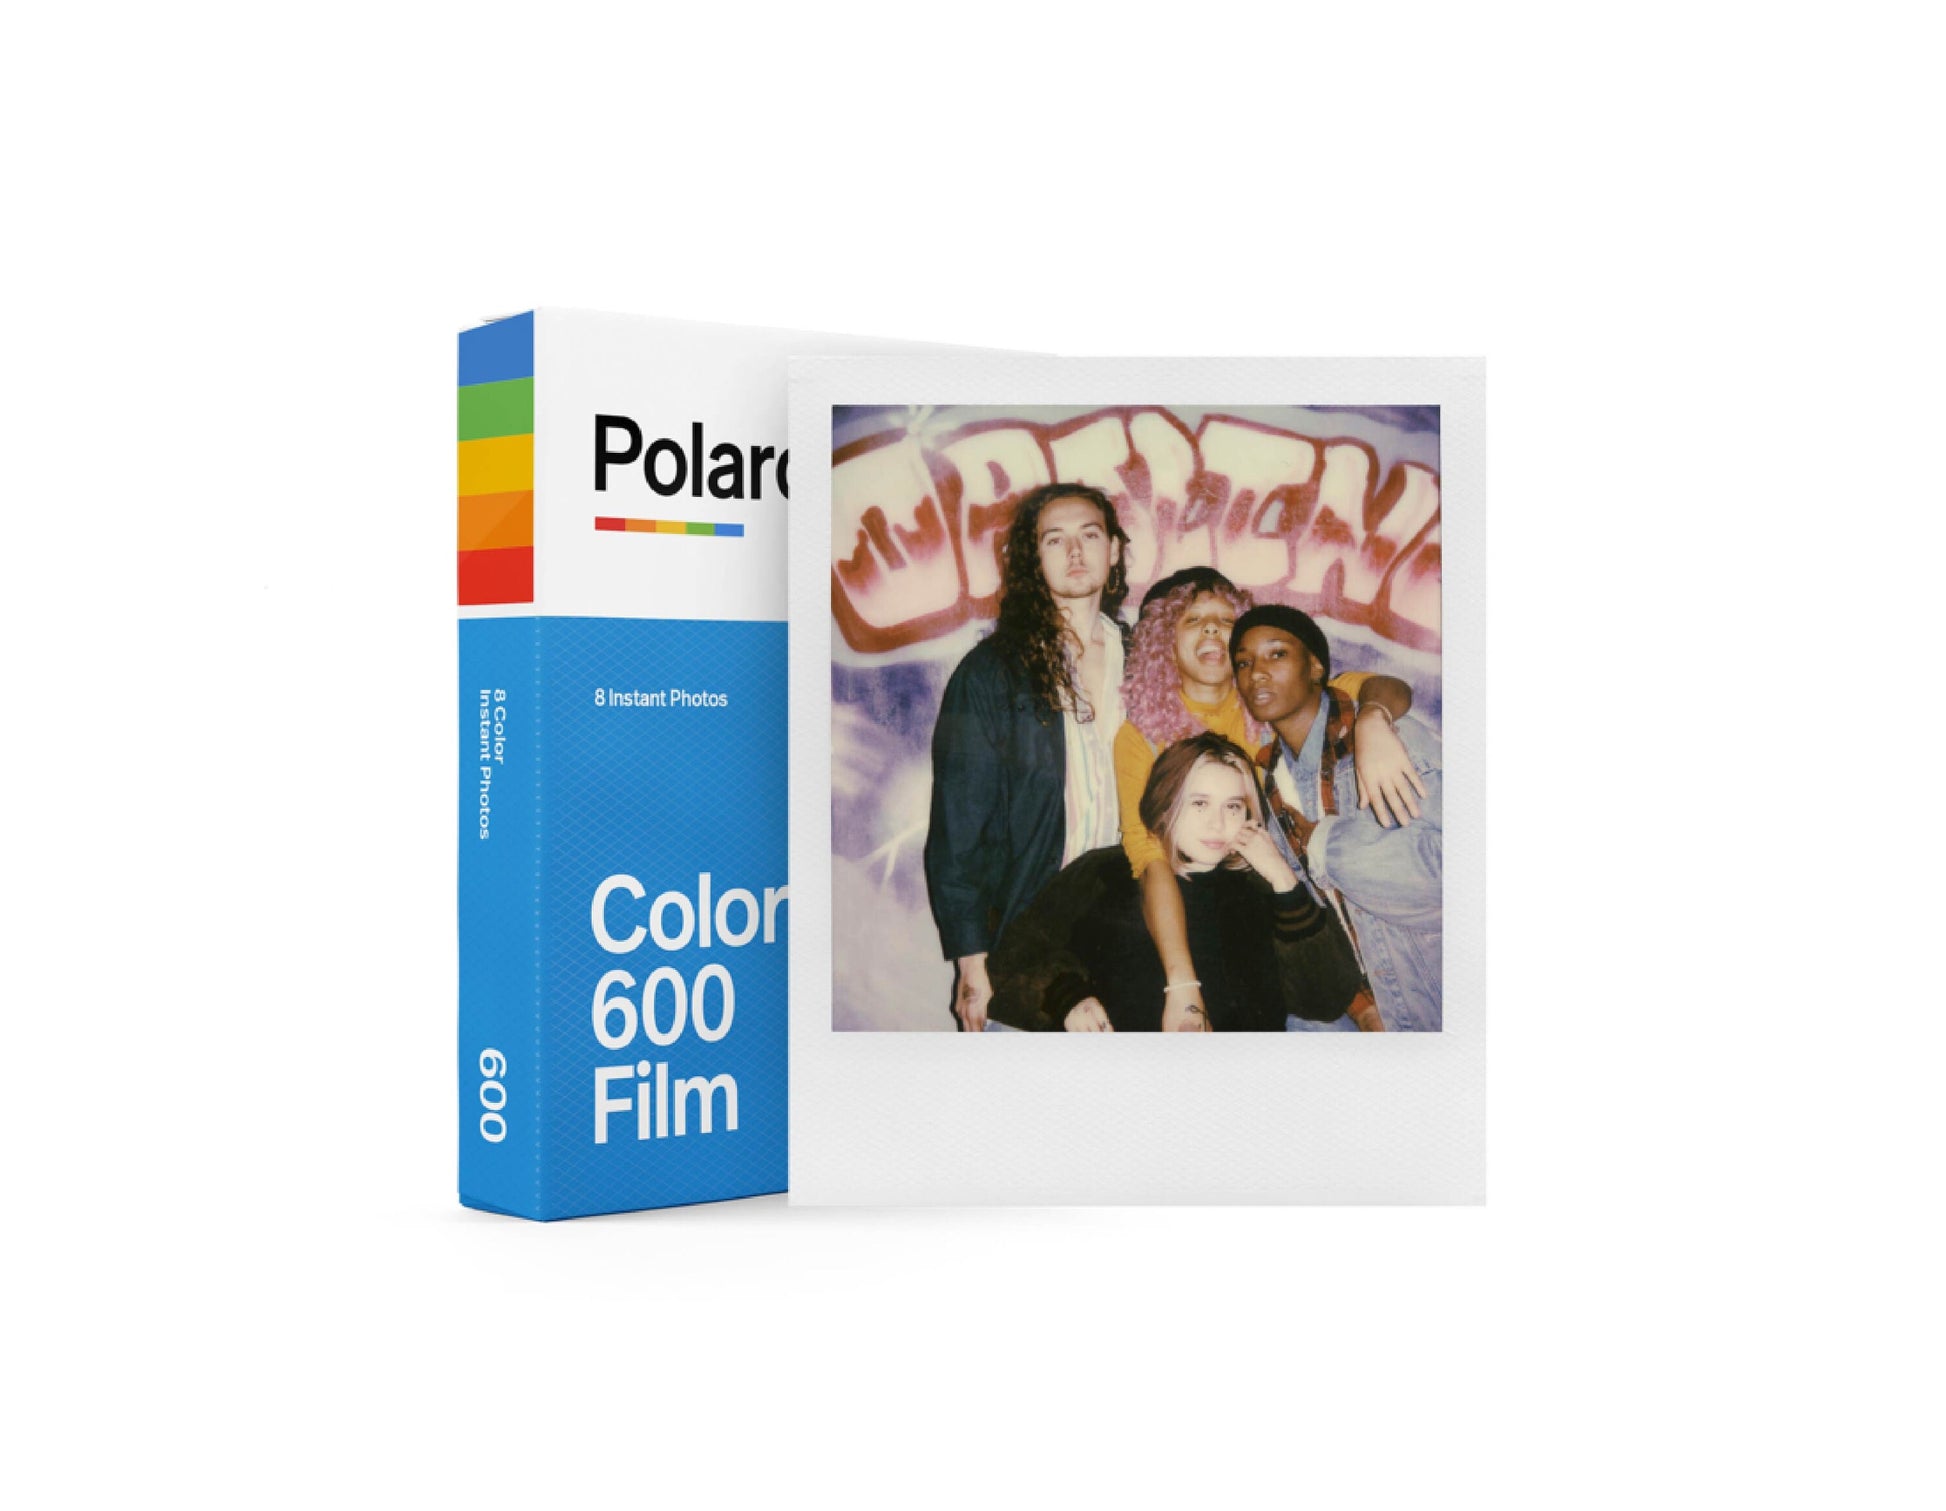 Polaroid Supercolor 635 SE, Vintage Polaroid Camera, Instant Perfectly Workoing Camera, Retro Camera, Gift for photographer, Polaroid 600 - Vintage Polaroid Instant Cameras